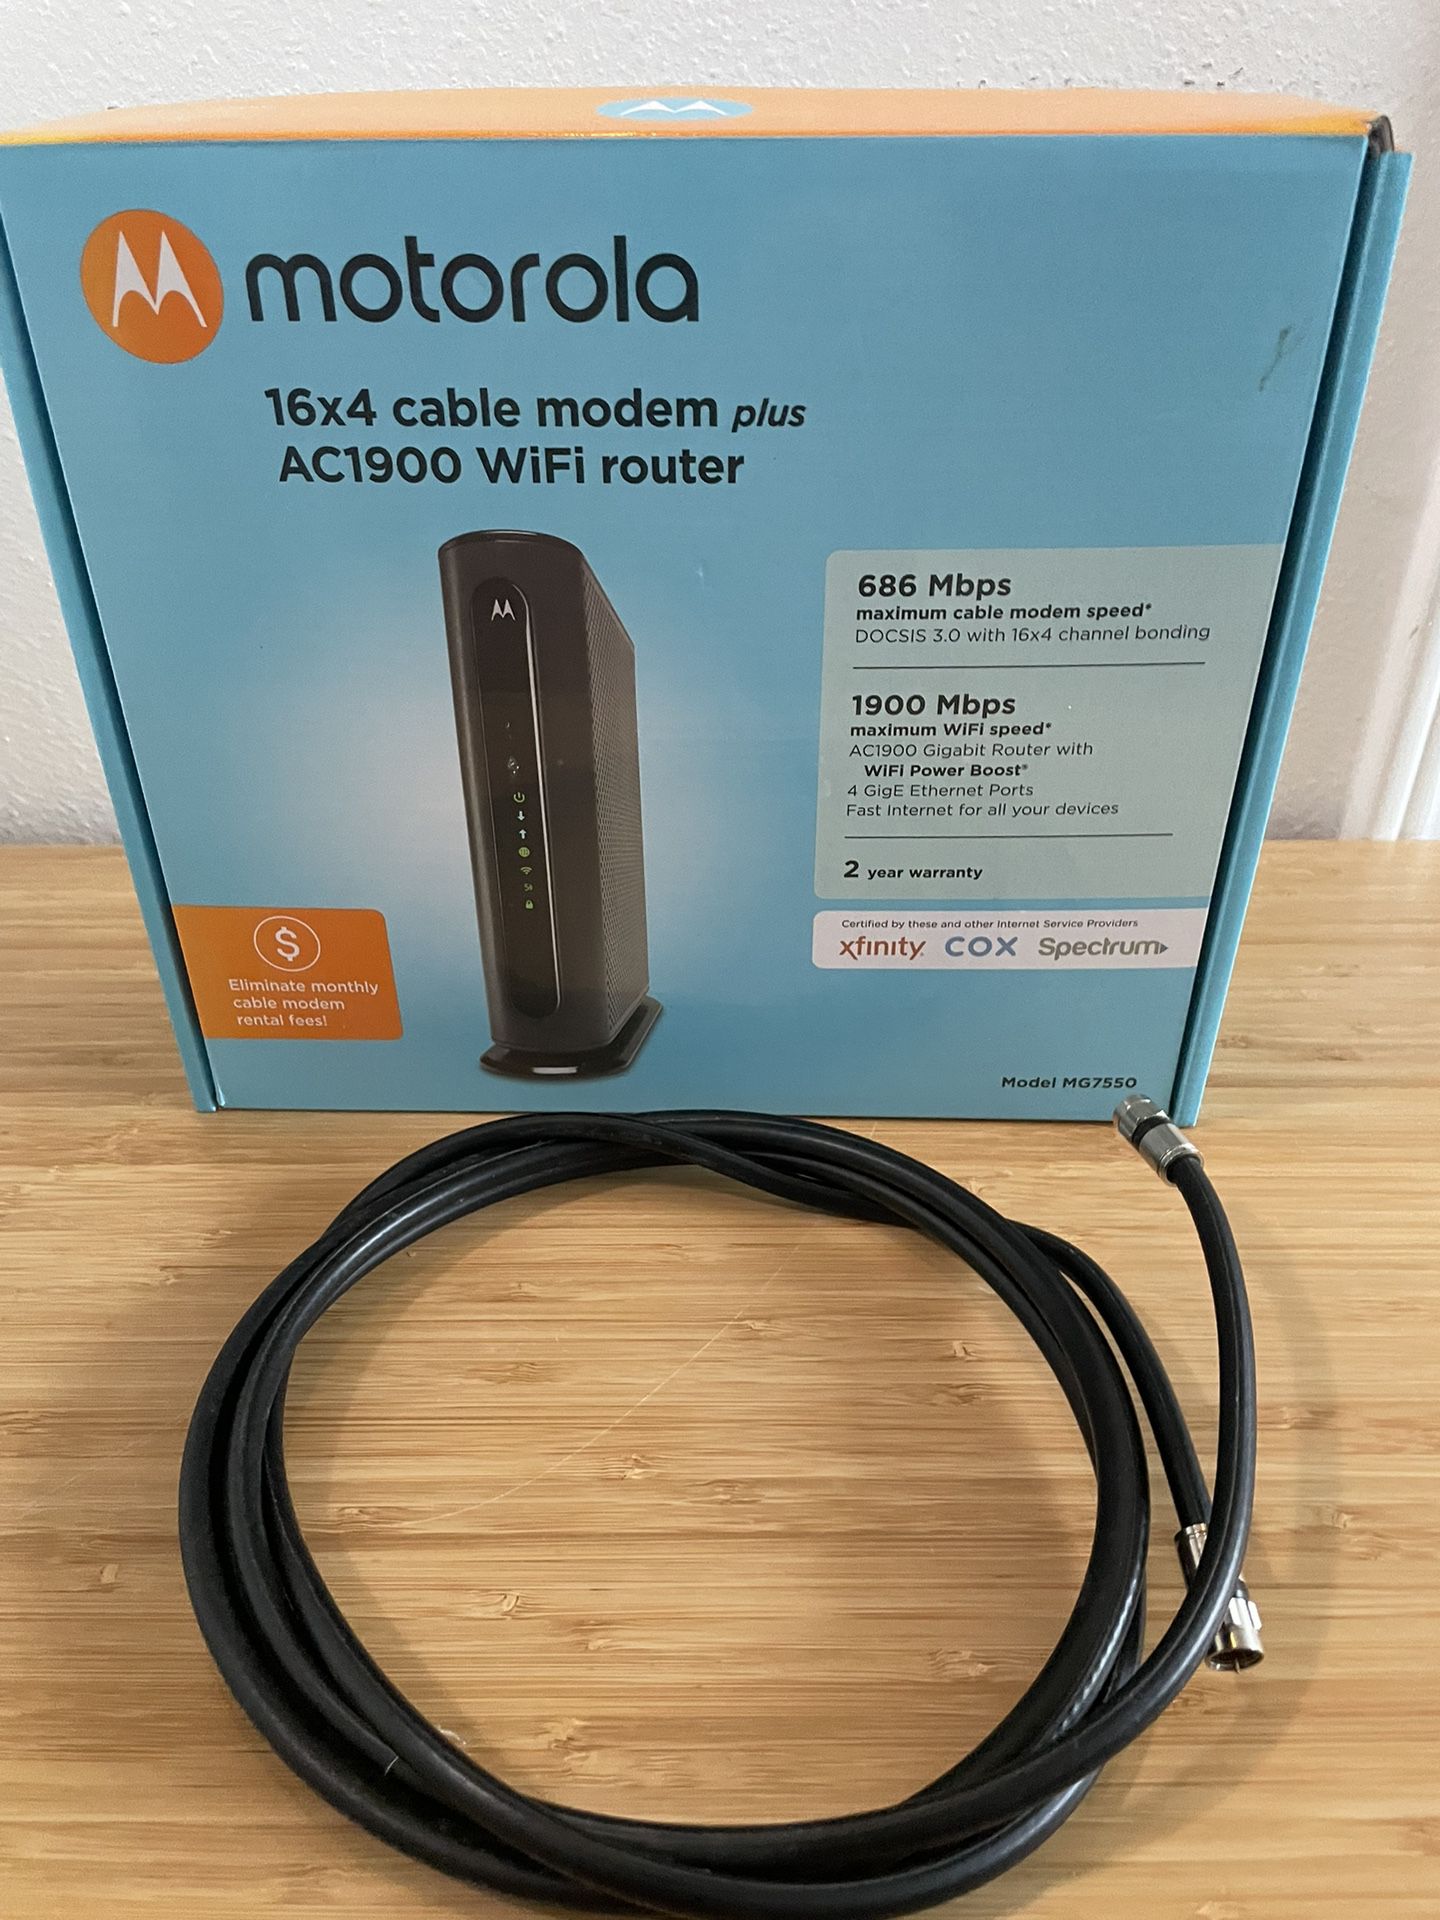 Motorola (model MG7550) 16x4 Cable Modem plus AC1900 Dual Band WiFi Gigabit Router